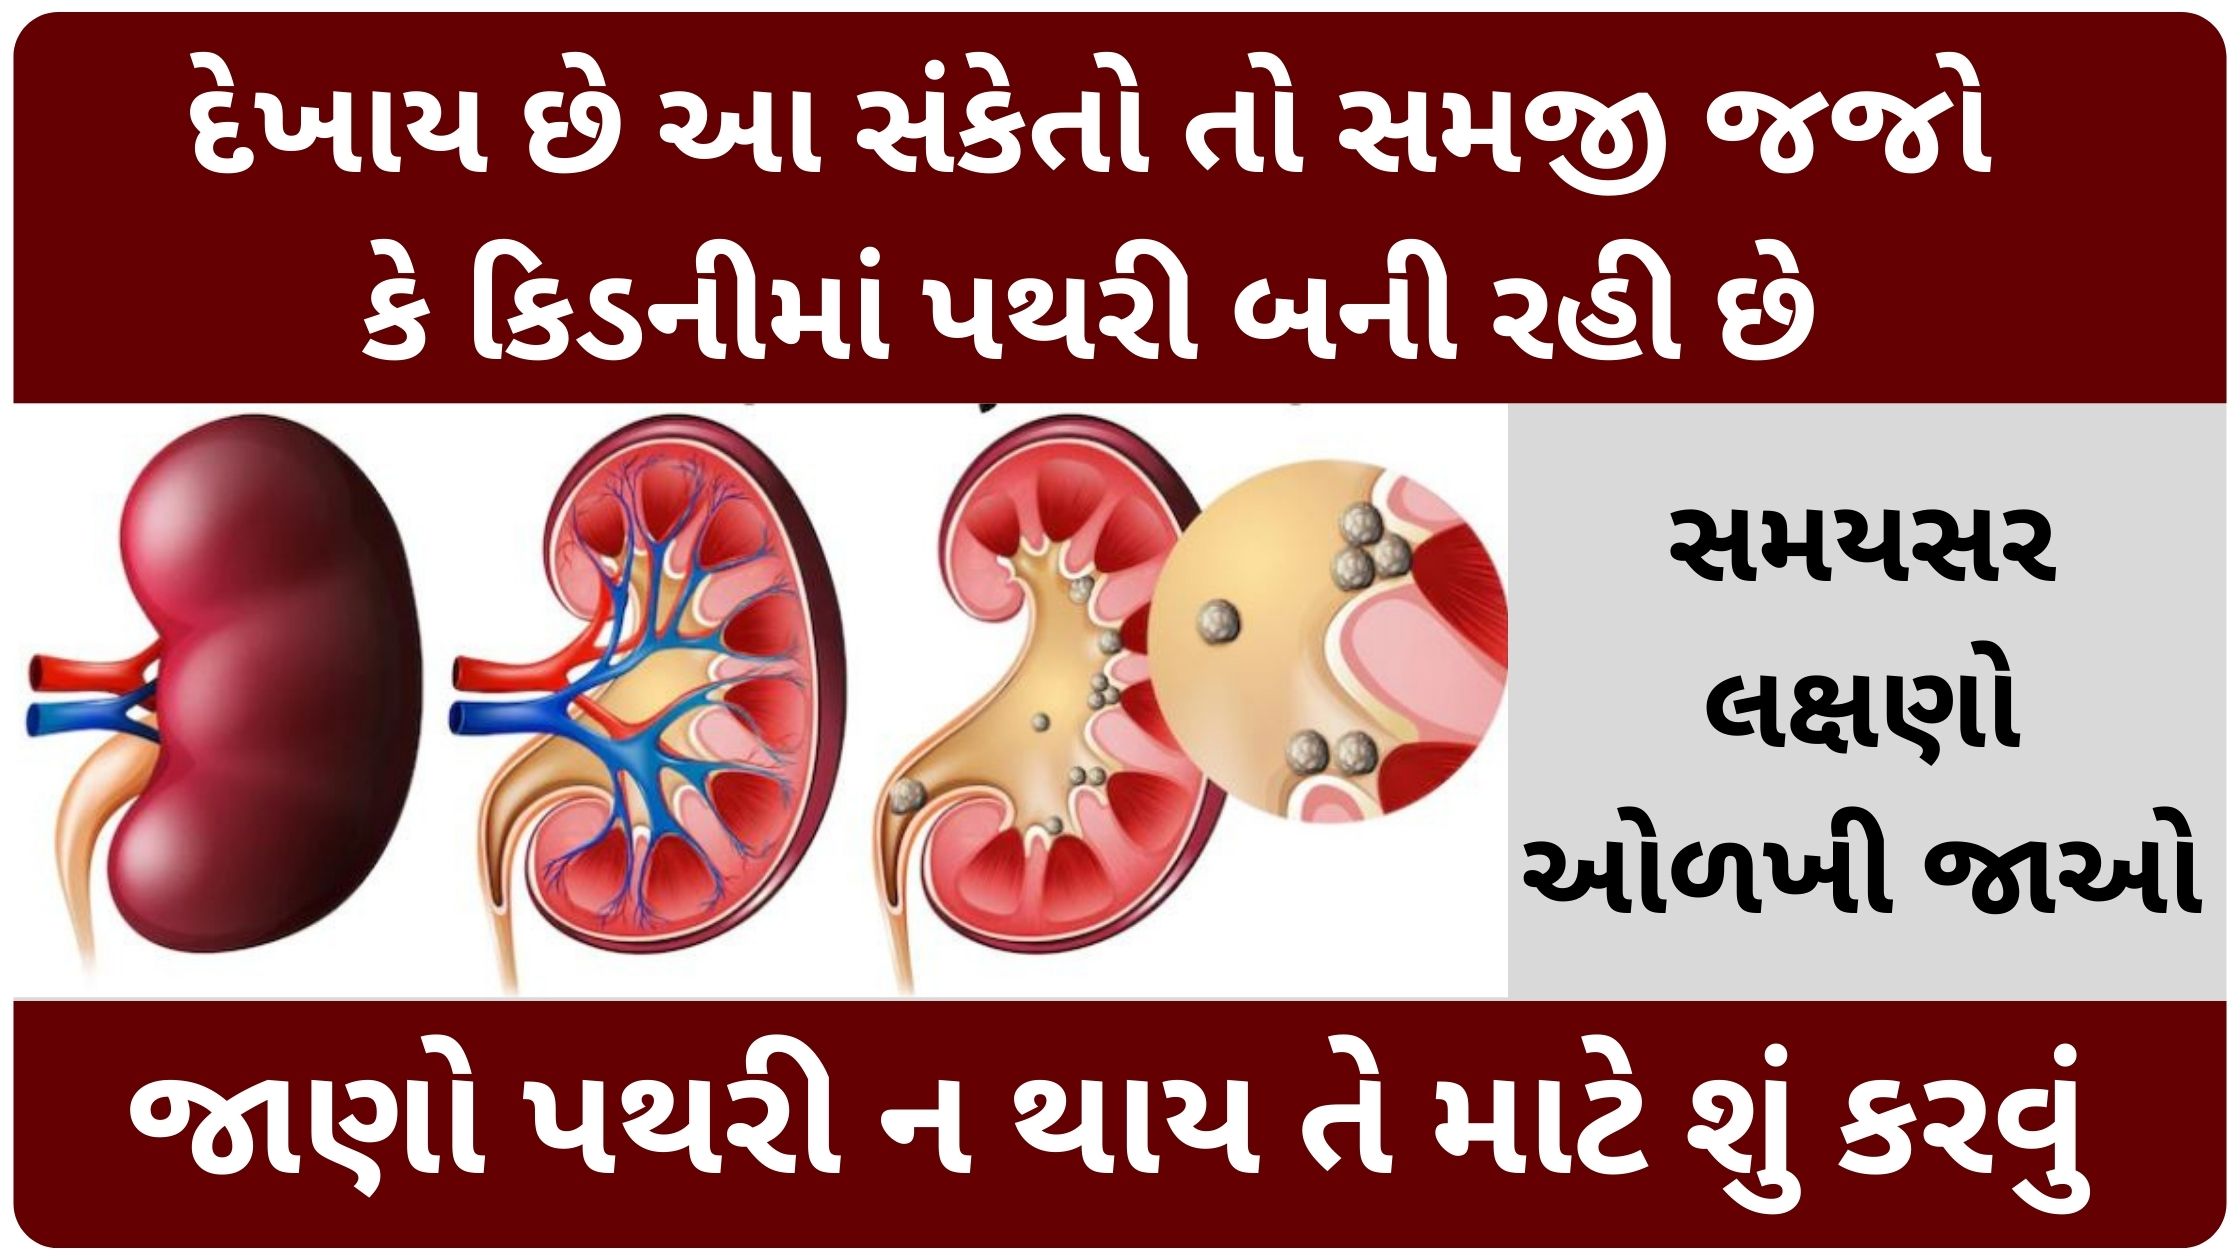 kidney stone symptoms